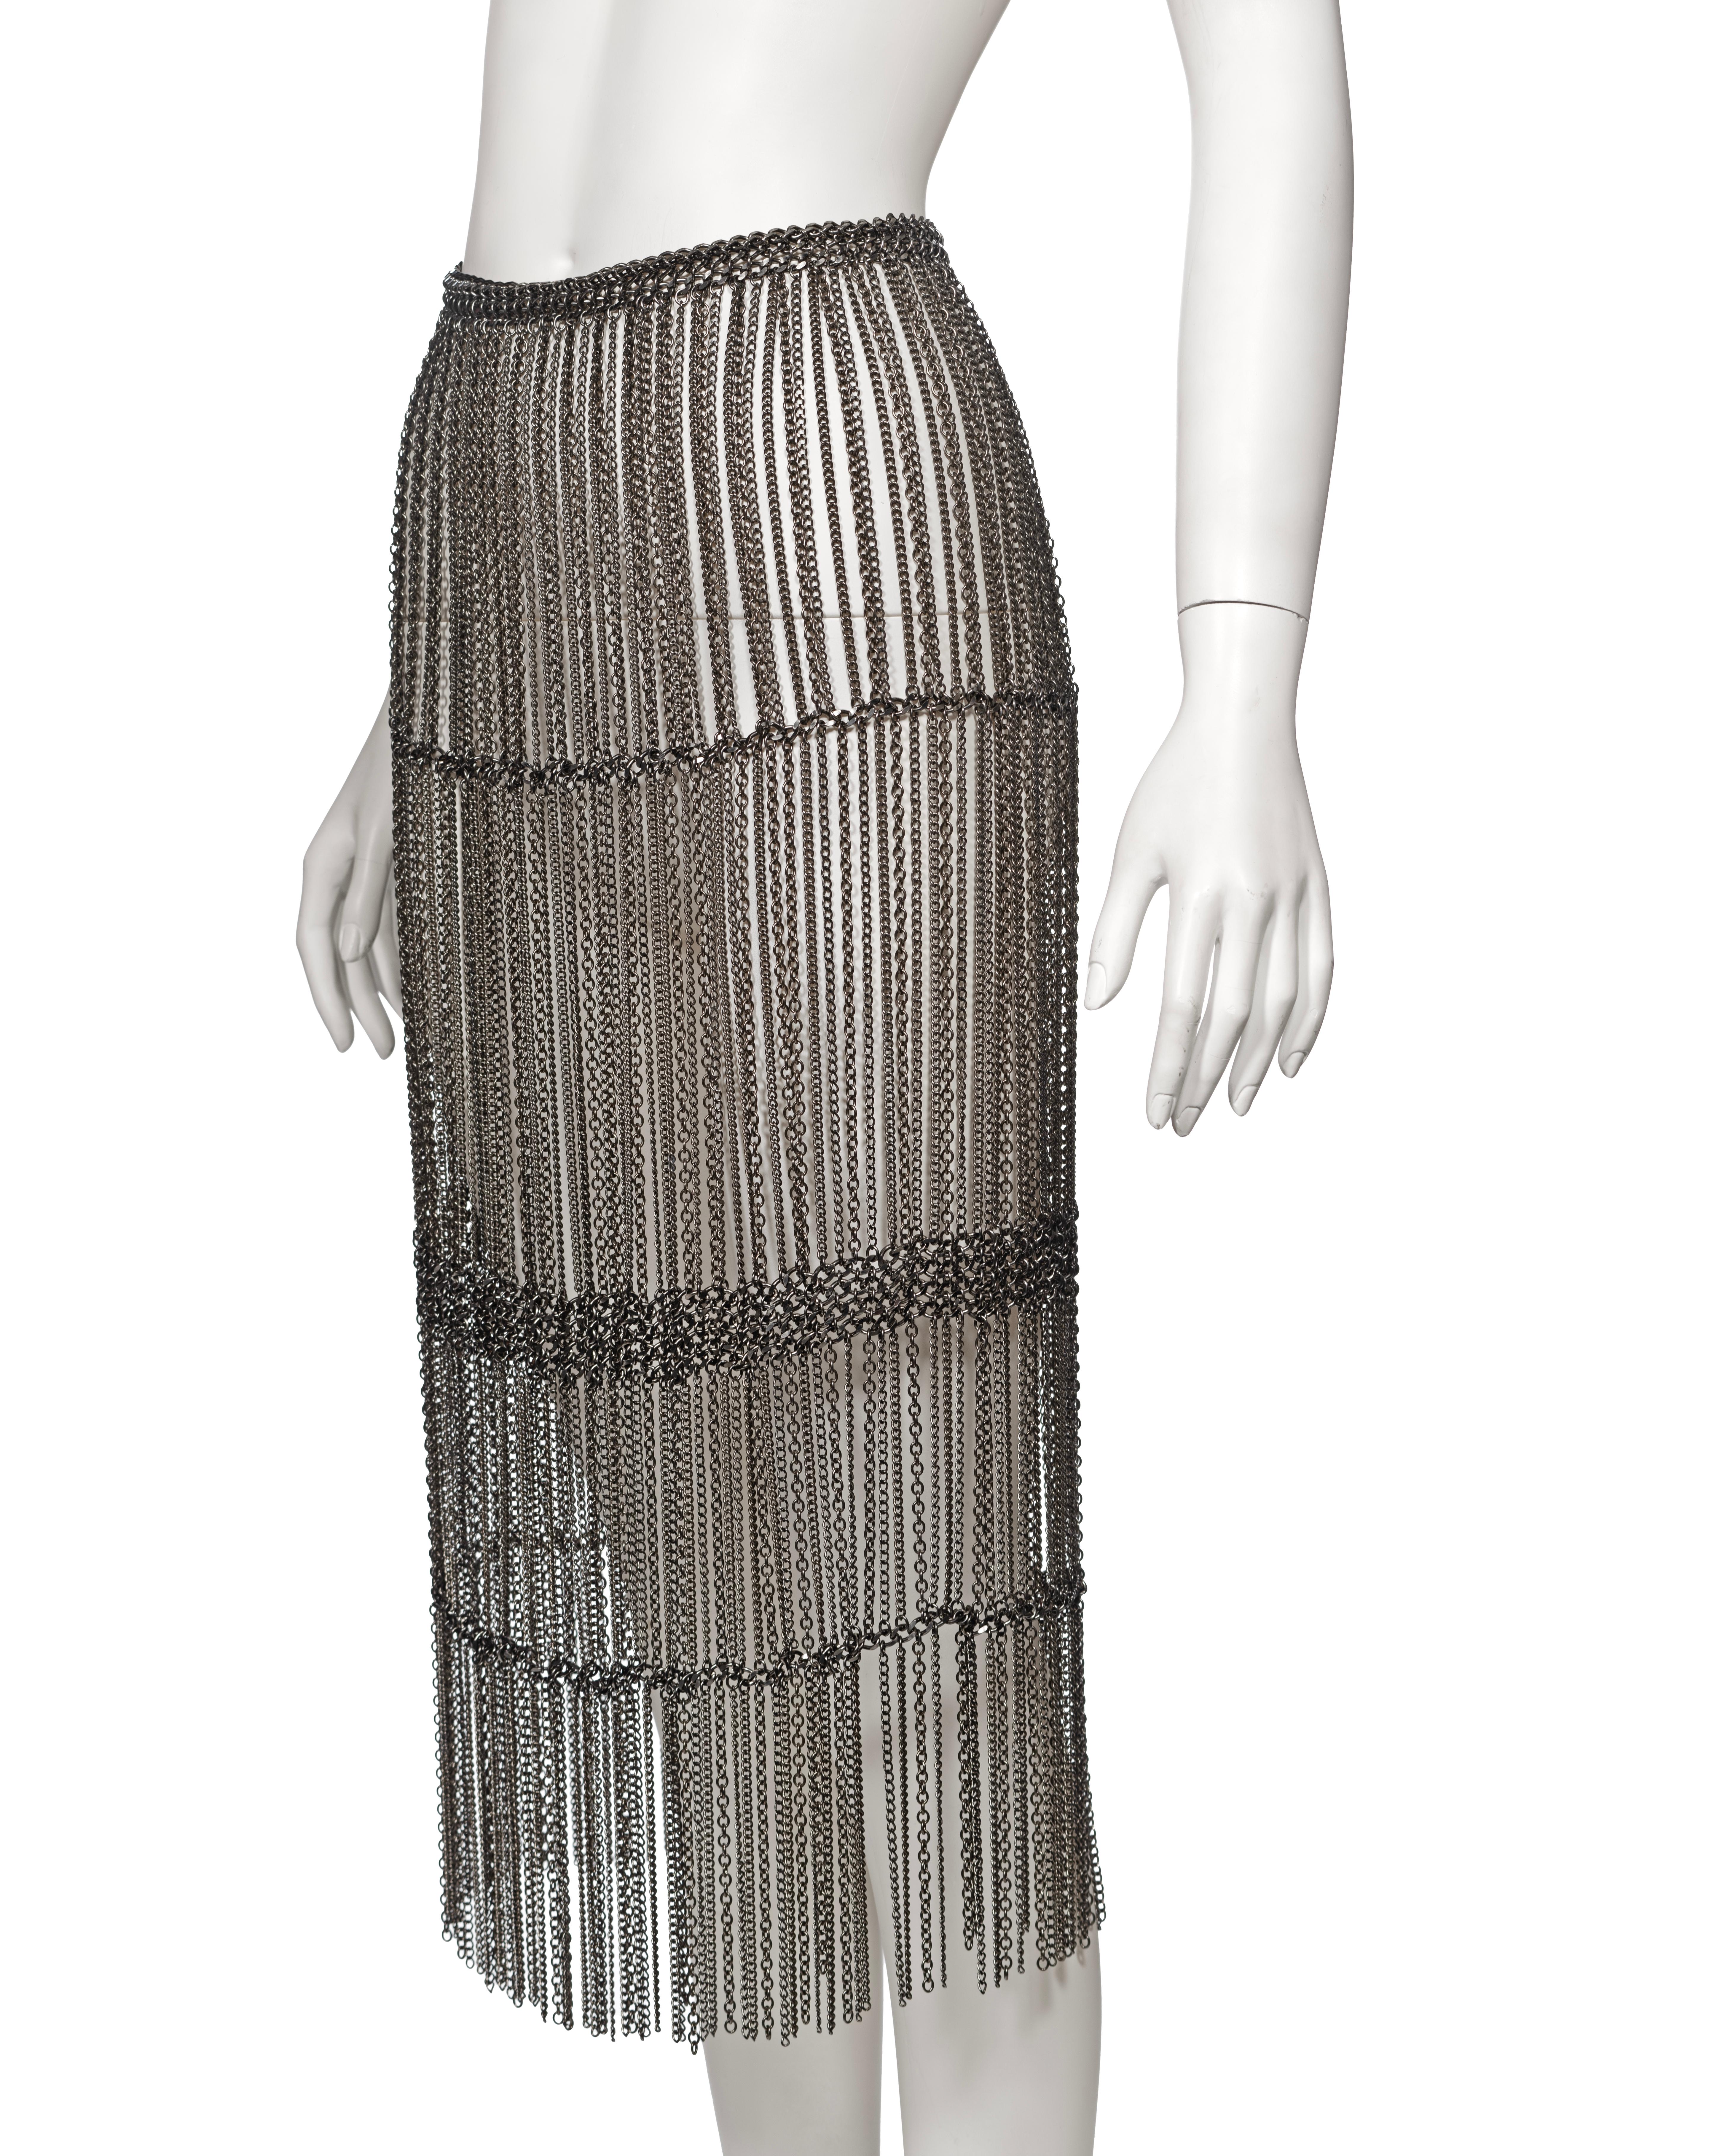 Prada by Miuccia Prada Silver Metal Chain Fringed Evening Skirt, fw 2002 For Sale 9